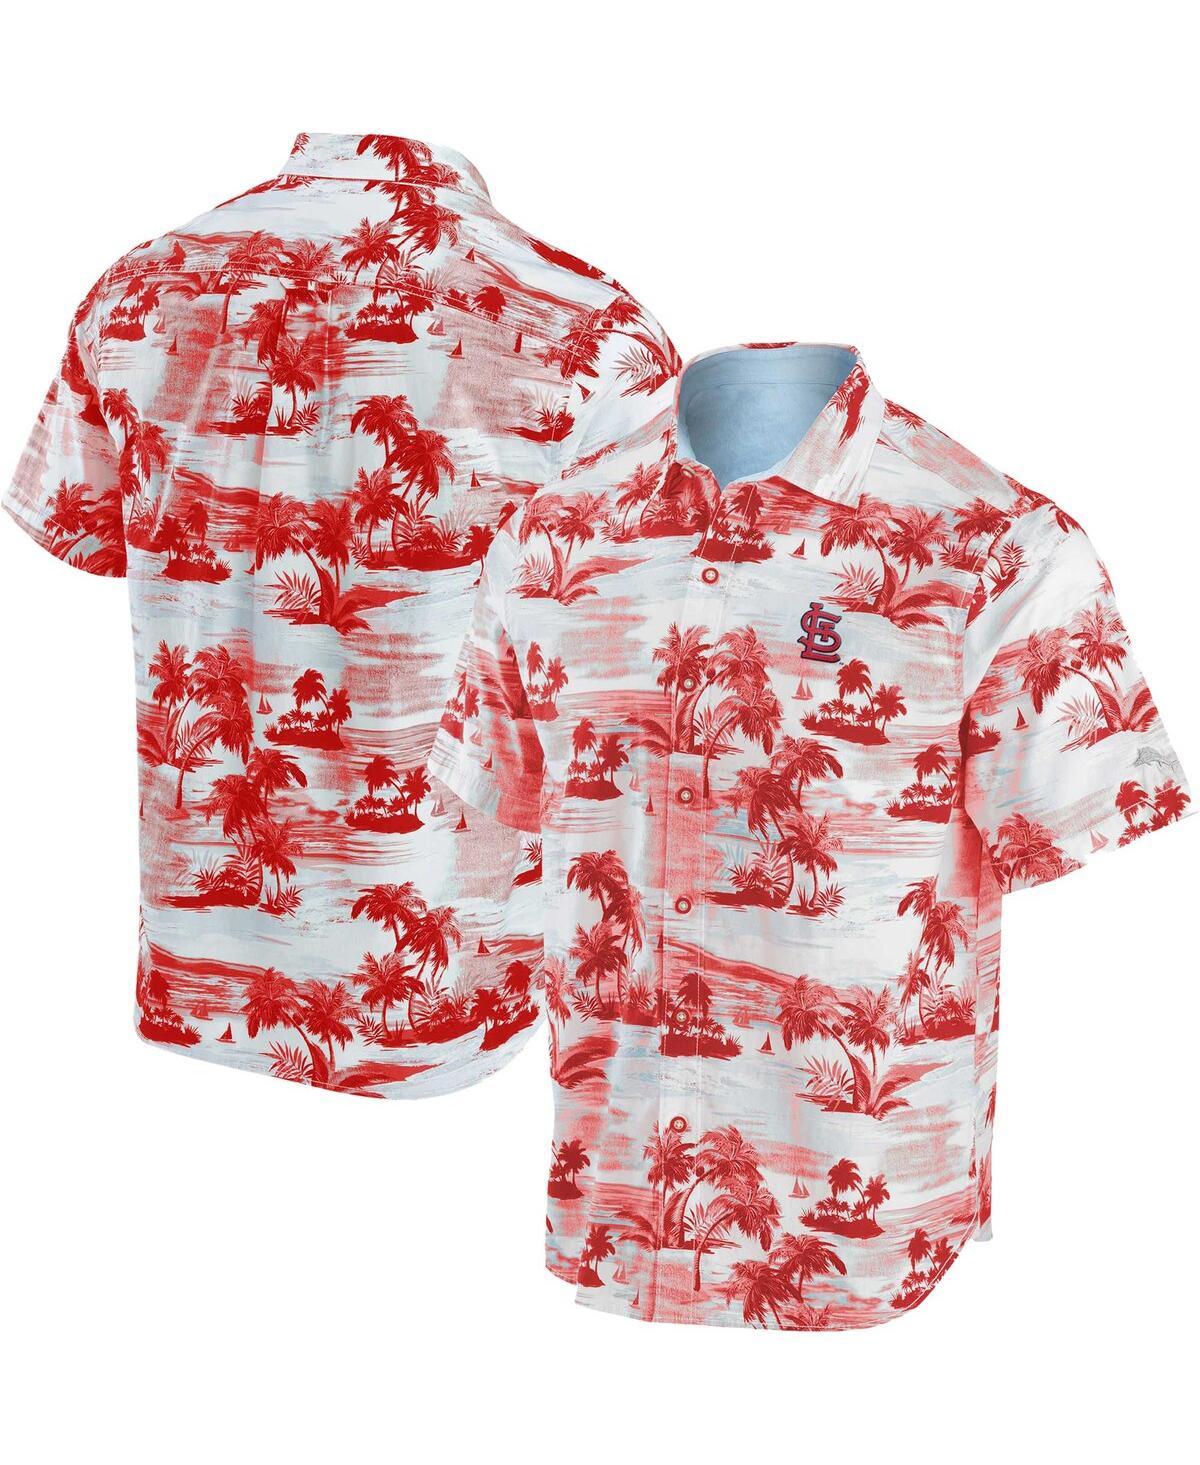 tommy bahama st louis cardinals shirt